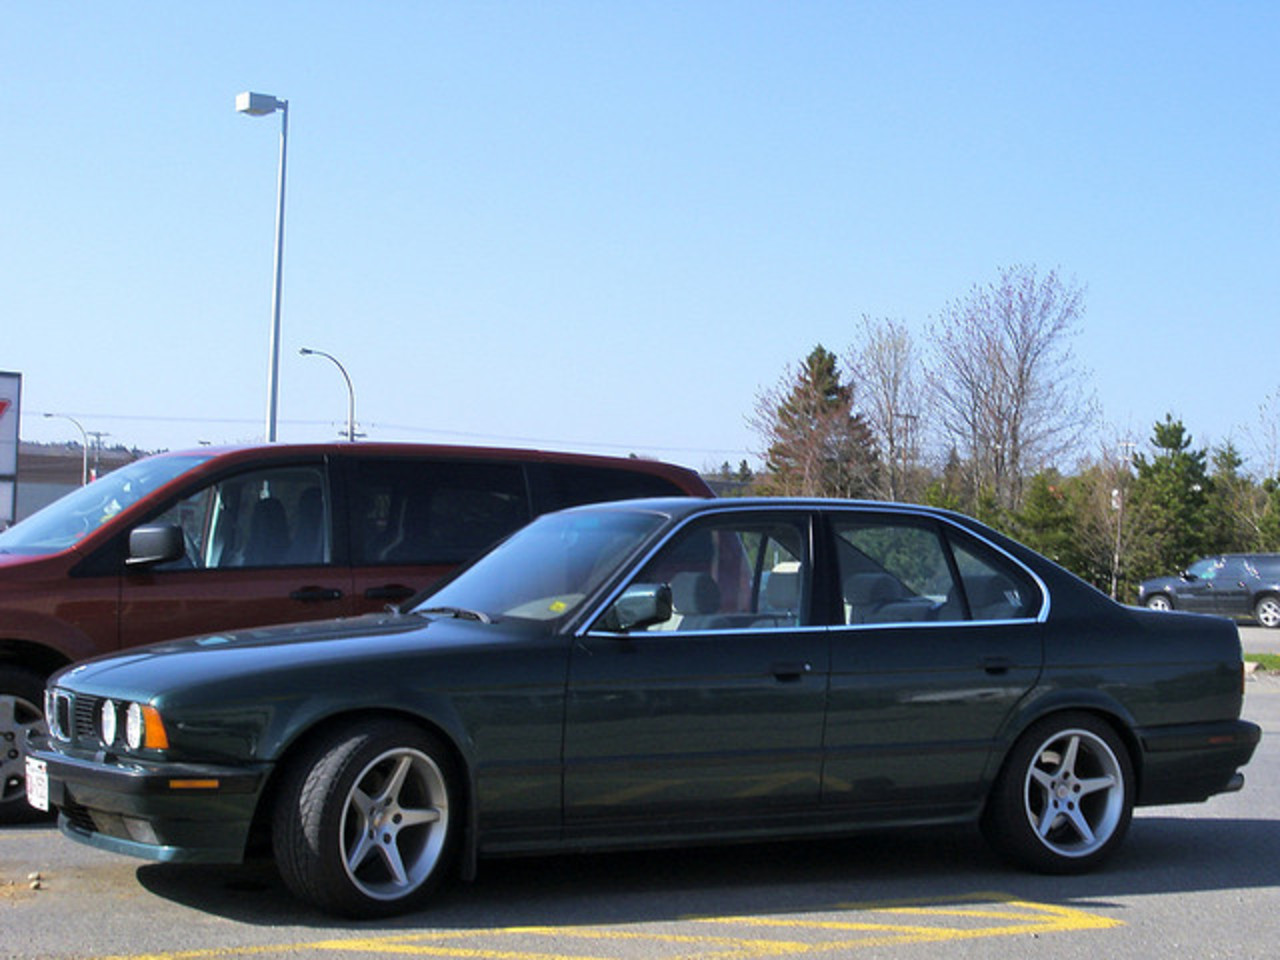 1992 BMW 525i (E34) | Flickr - Photo Sharing!